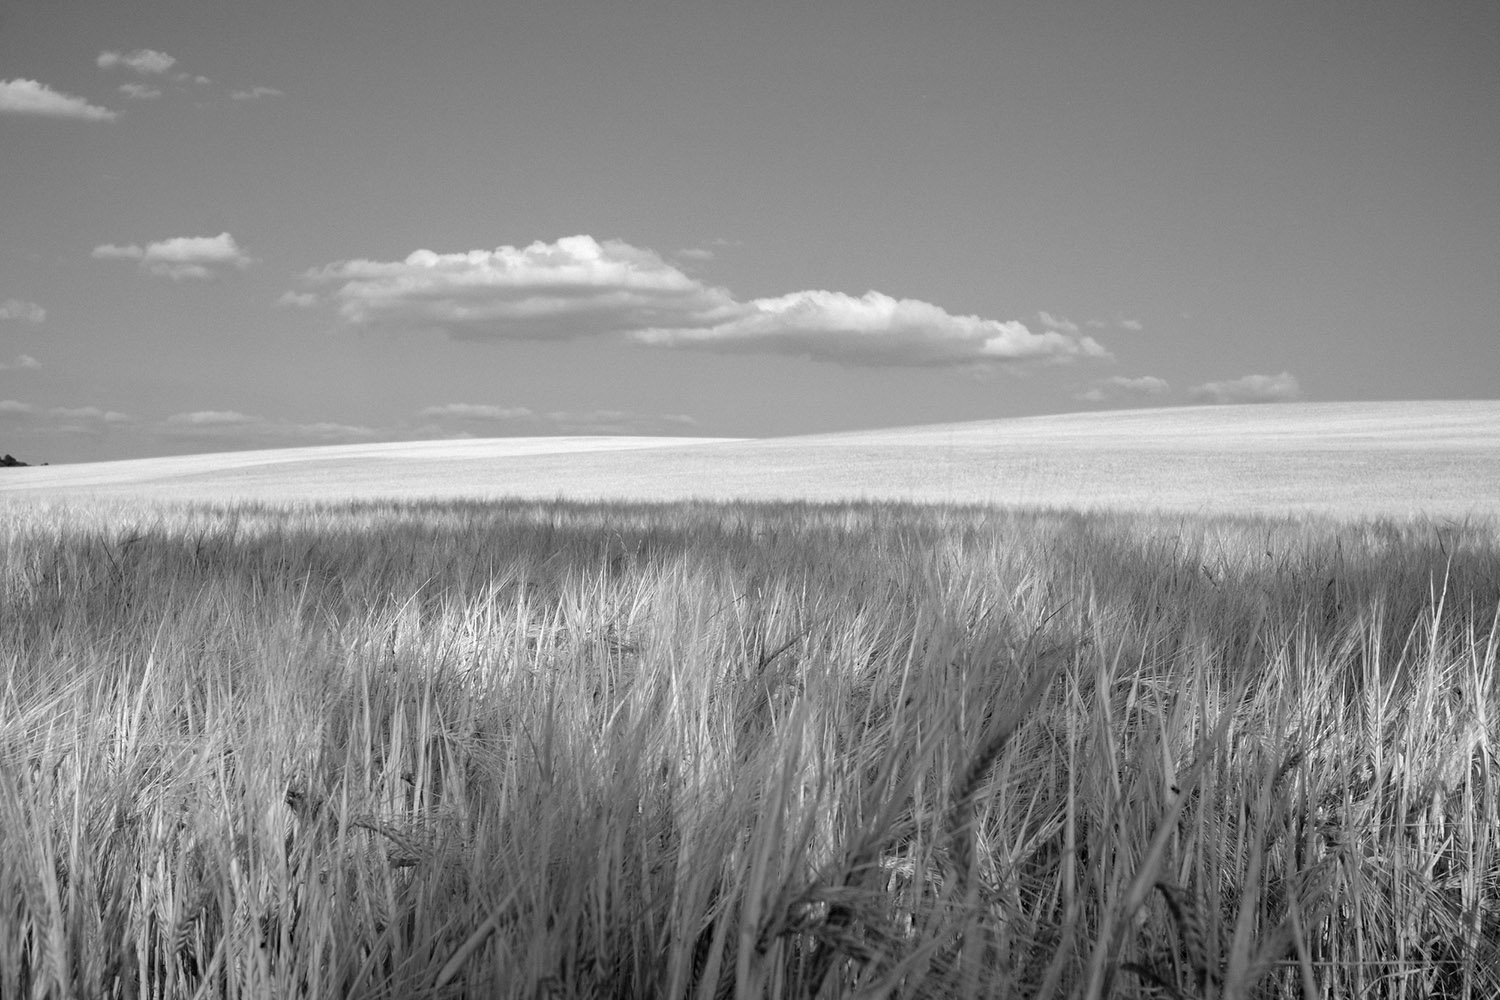 Same wheat field